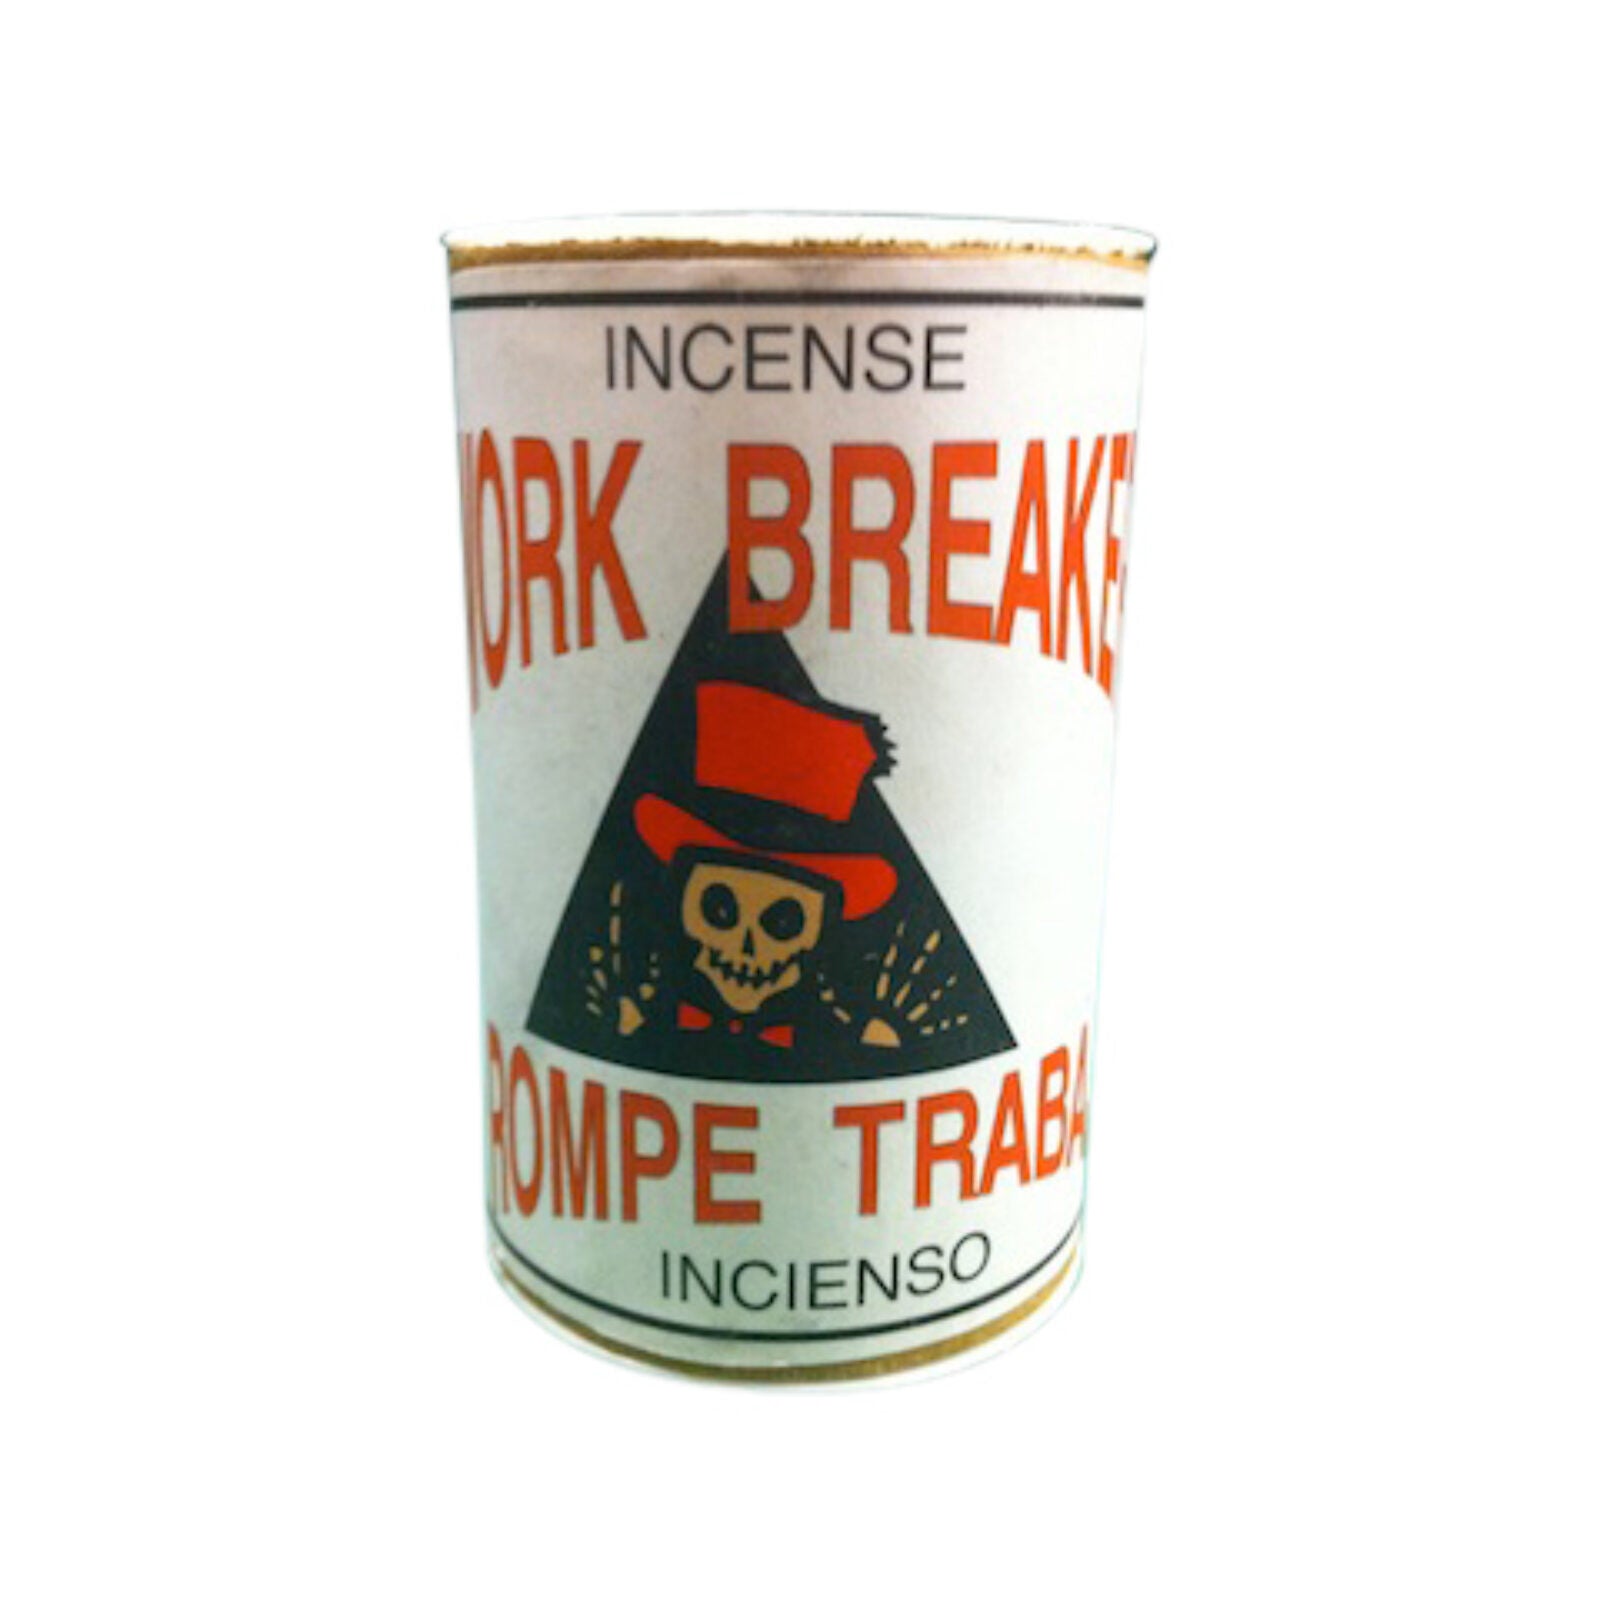 Work Breaker Incense Powder